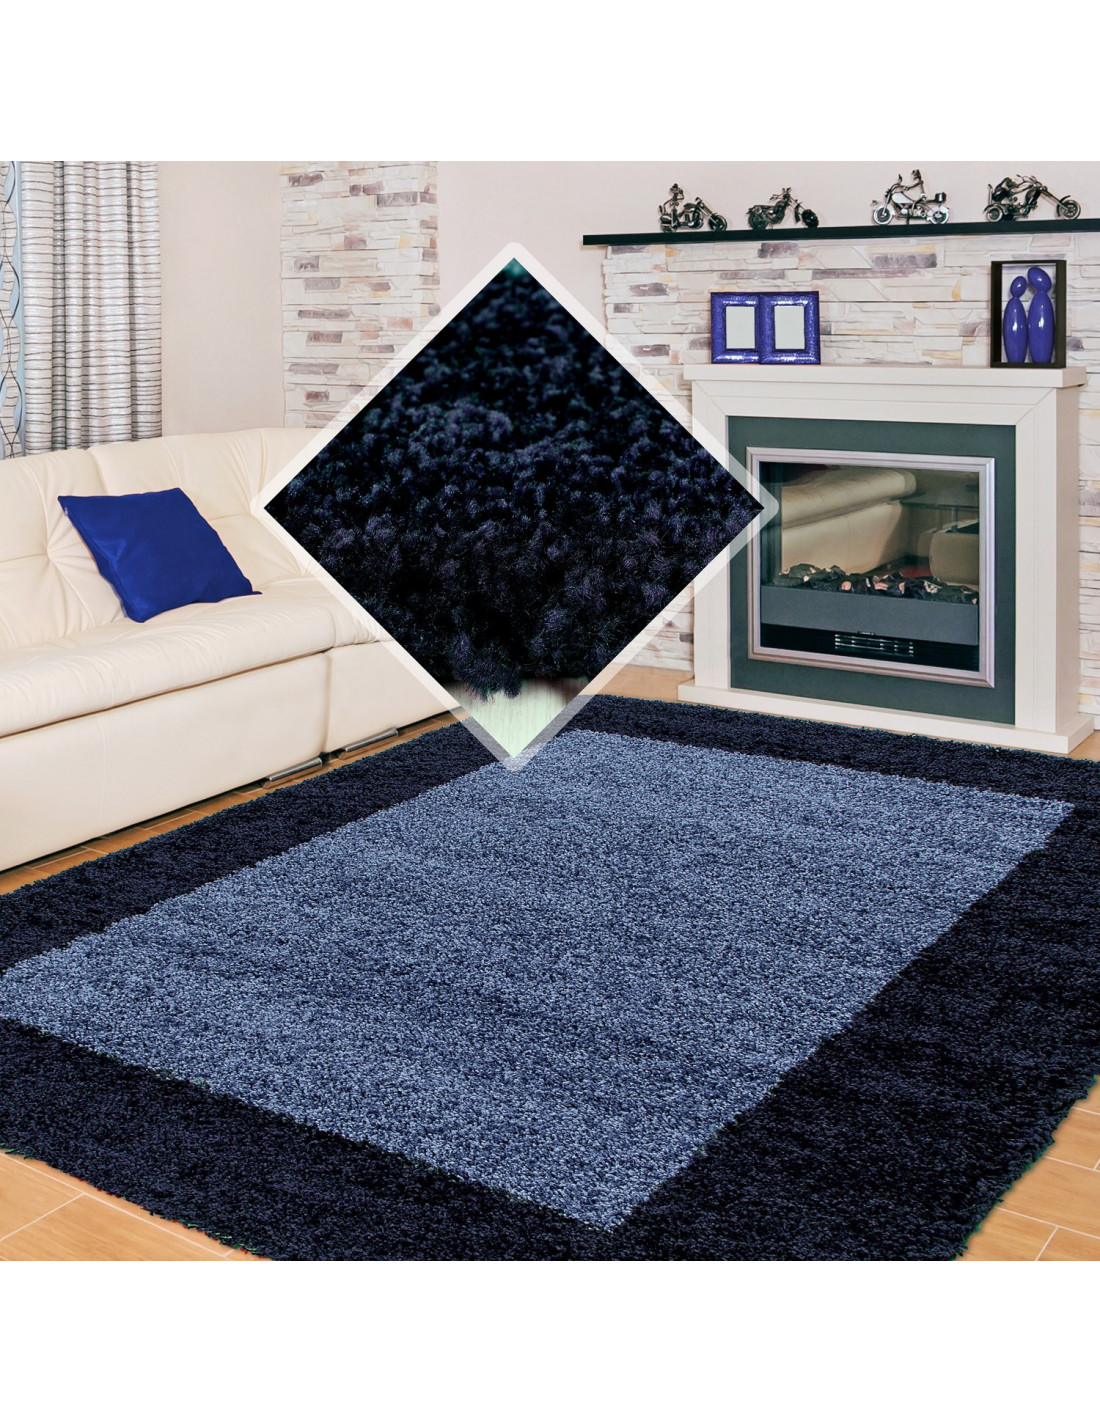 Merg dun browser Hoogpolig tapijt, hoogpolig, langpolig, woonkamer hoogpolig tapijt,  2-kleurig poolhoogte 3 cm, marineblauw